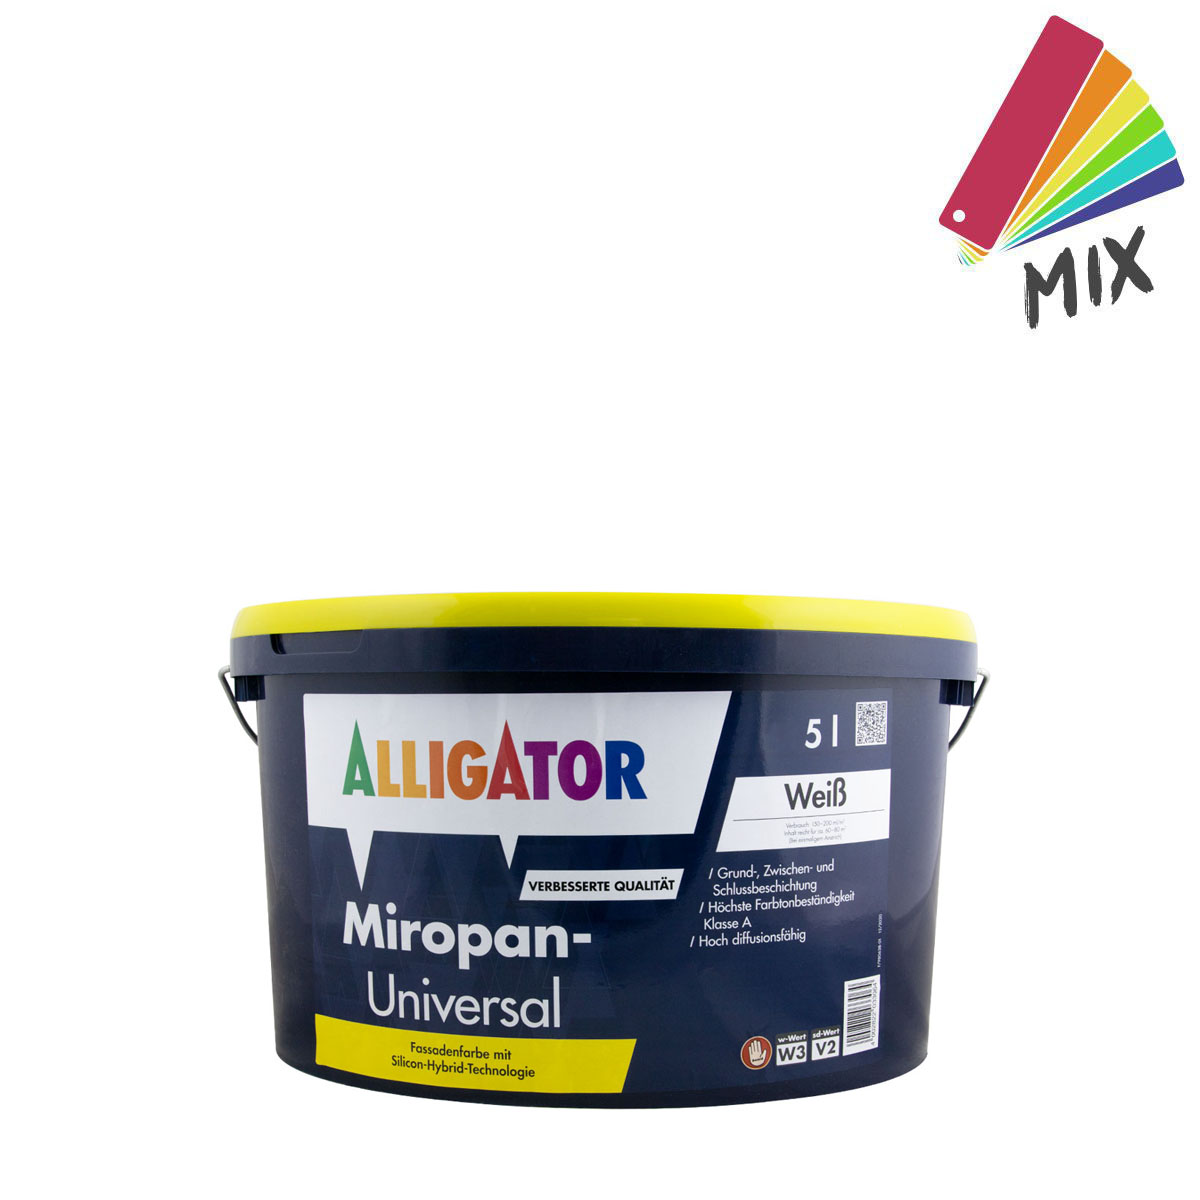 Alligator Miropan-Universal 5L MIX PG S, Siliconharz-Fassadenfarbe